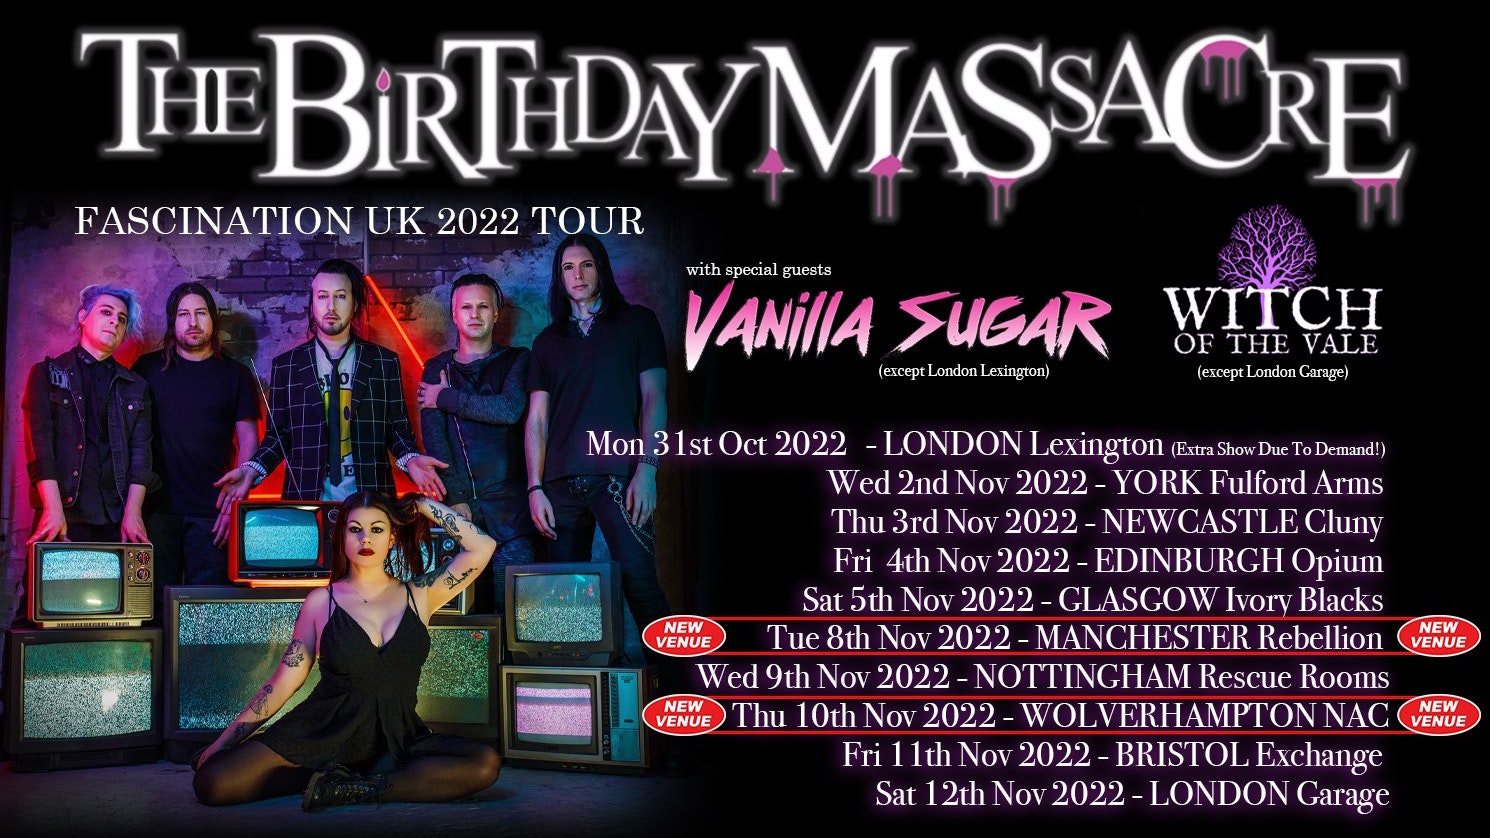 THE BIRTHDAY MASSACRE – Fascination UK 2022 Tour